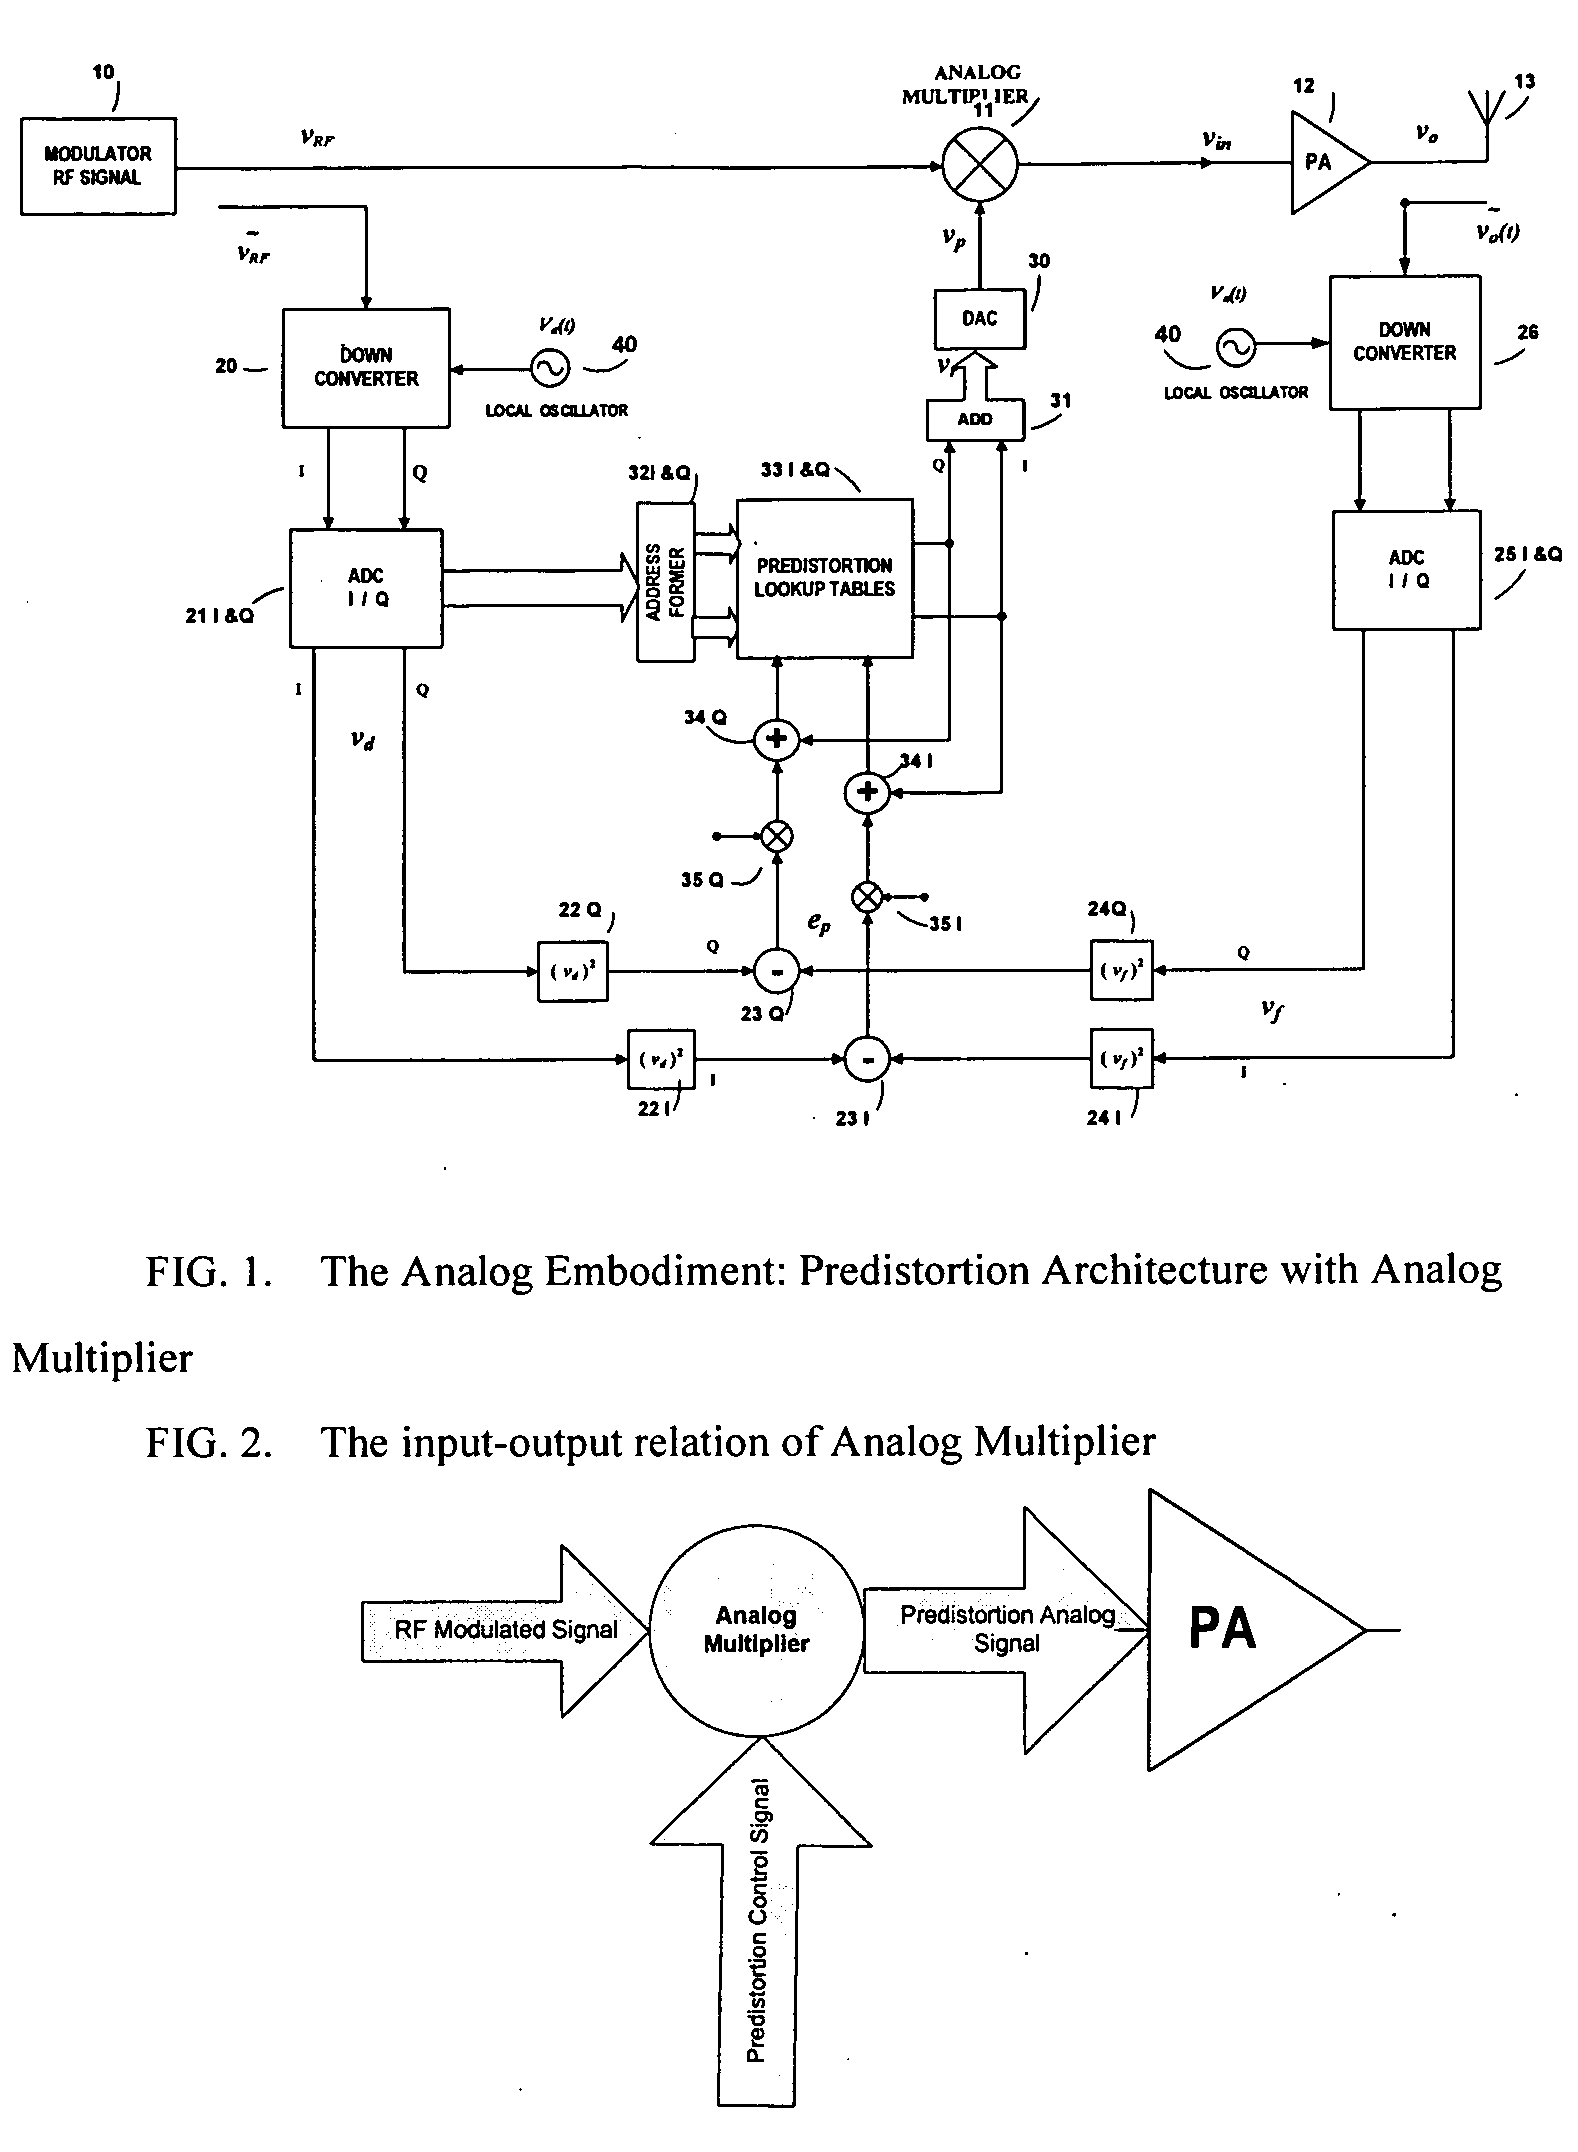 Analog power amplifier predistortion methods and apparatus